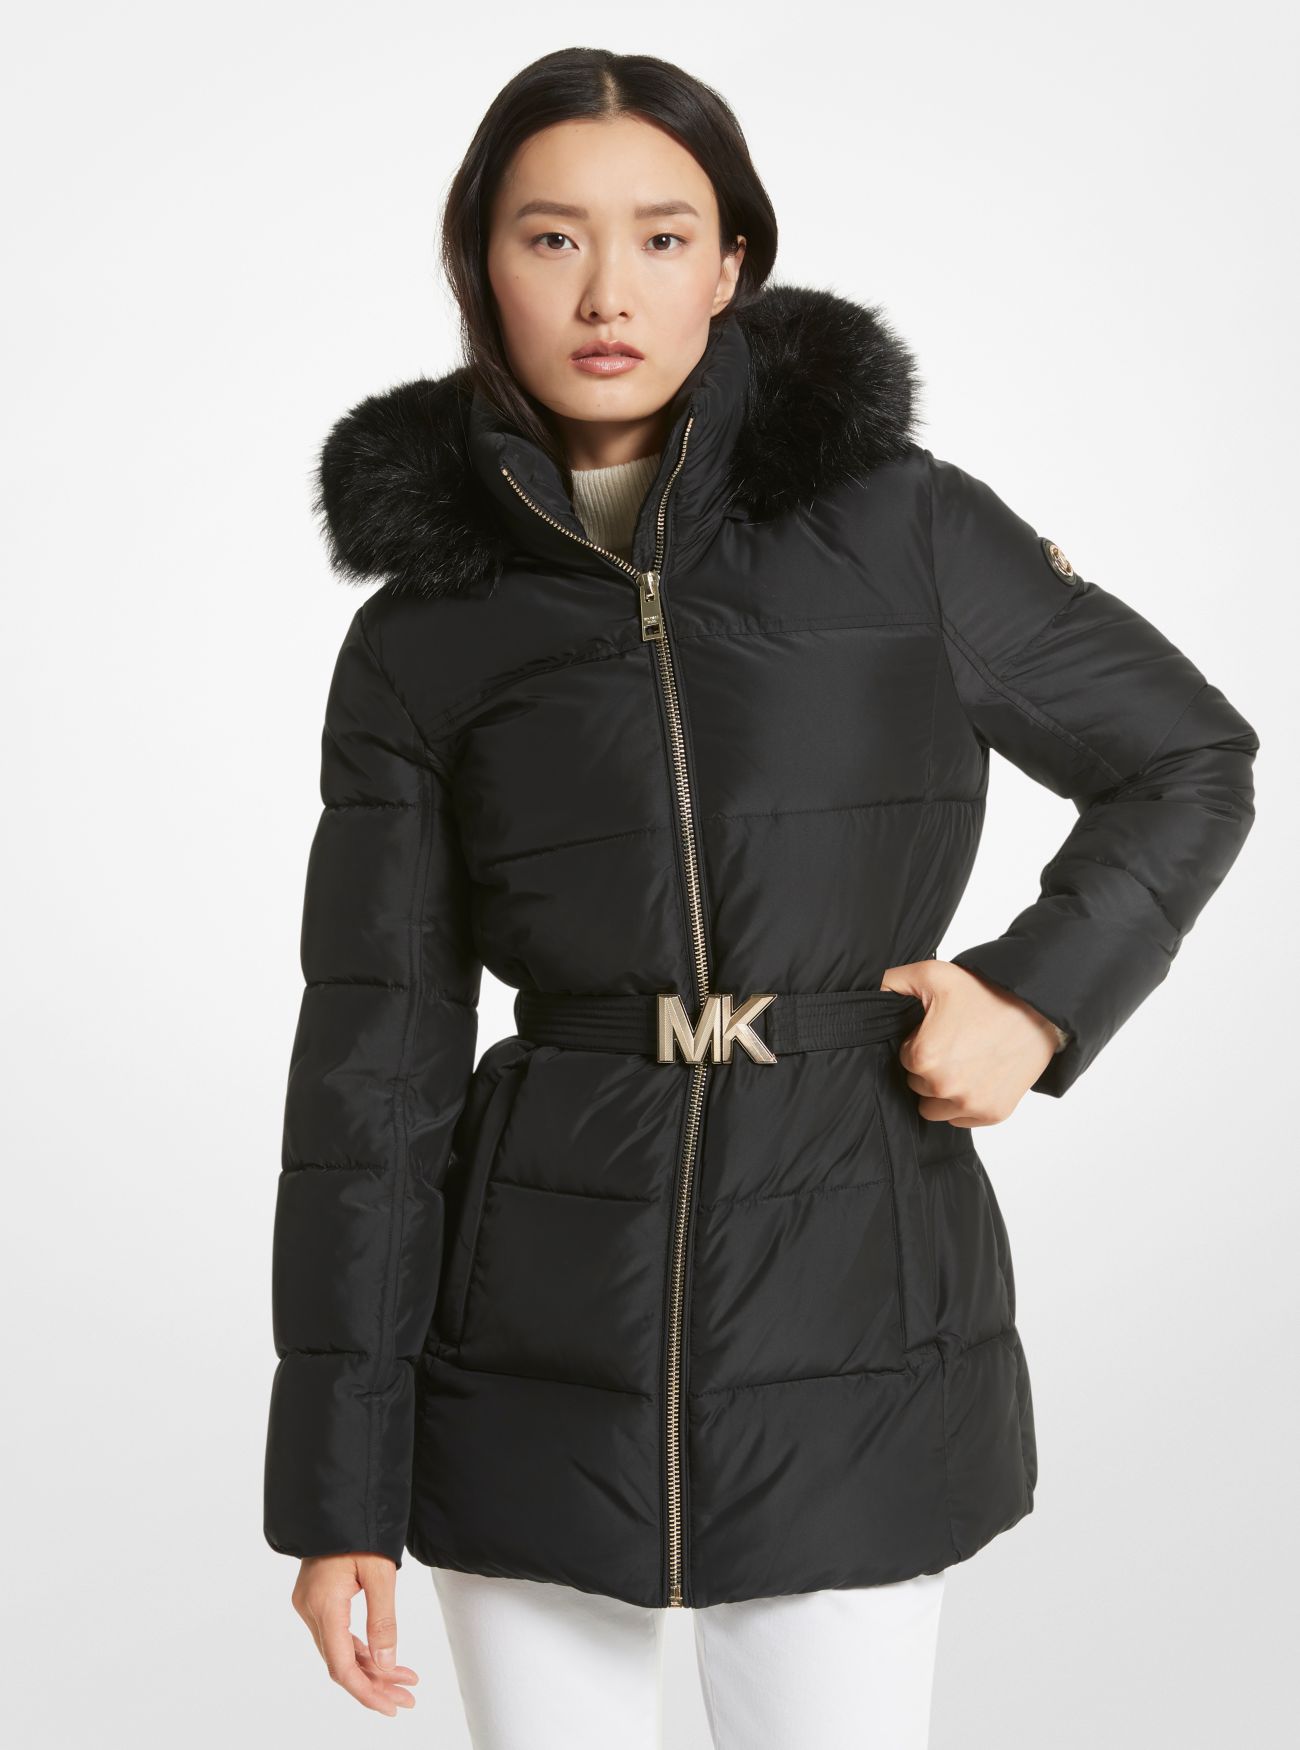 MK Quilted Puffer Jacket - Black - Michael Kors